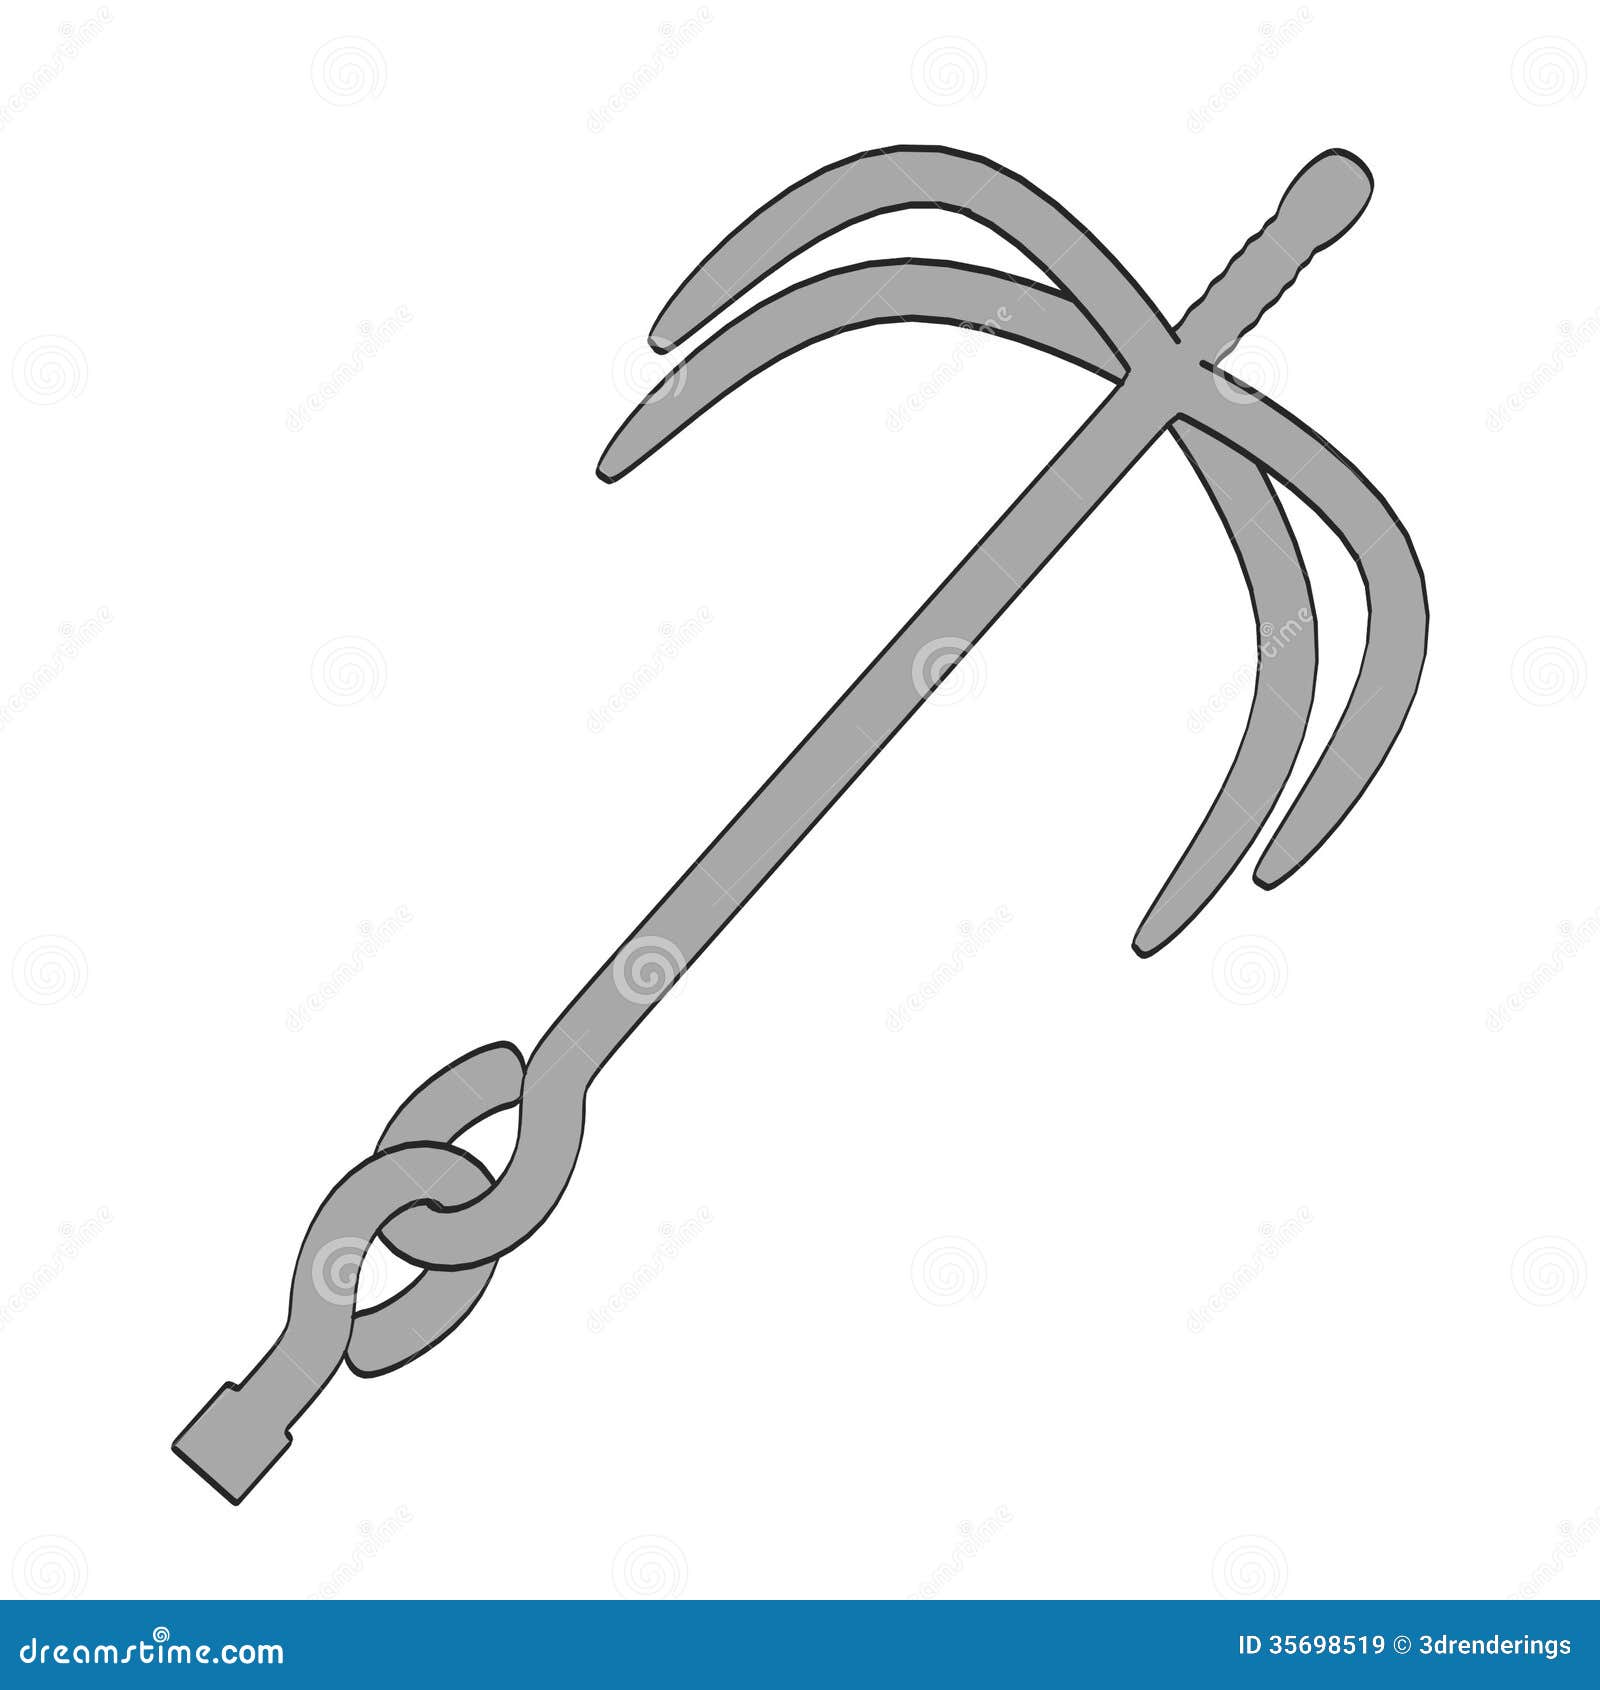 Image of grapling hook stock illustration. Illustration of toon - 35698519